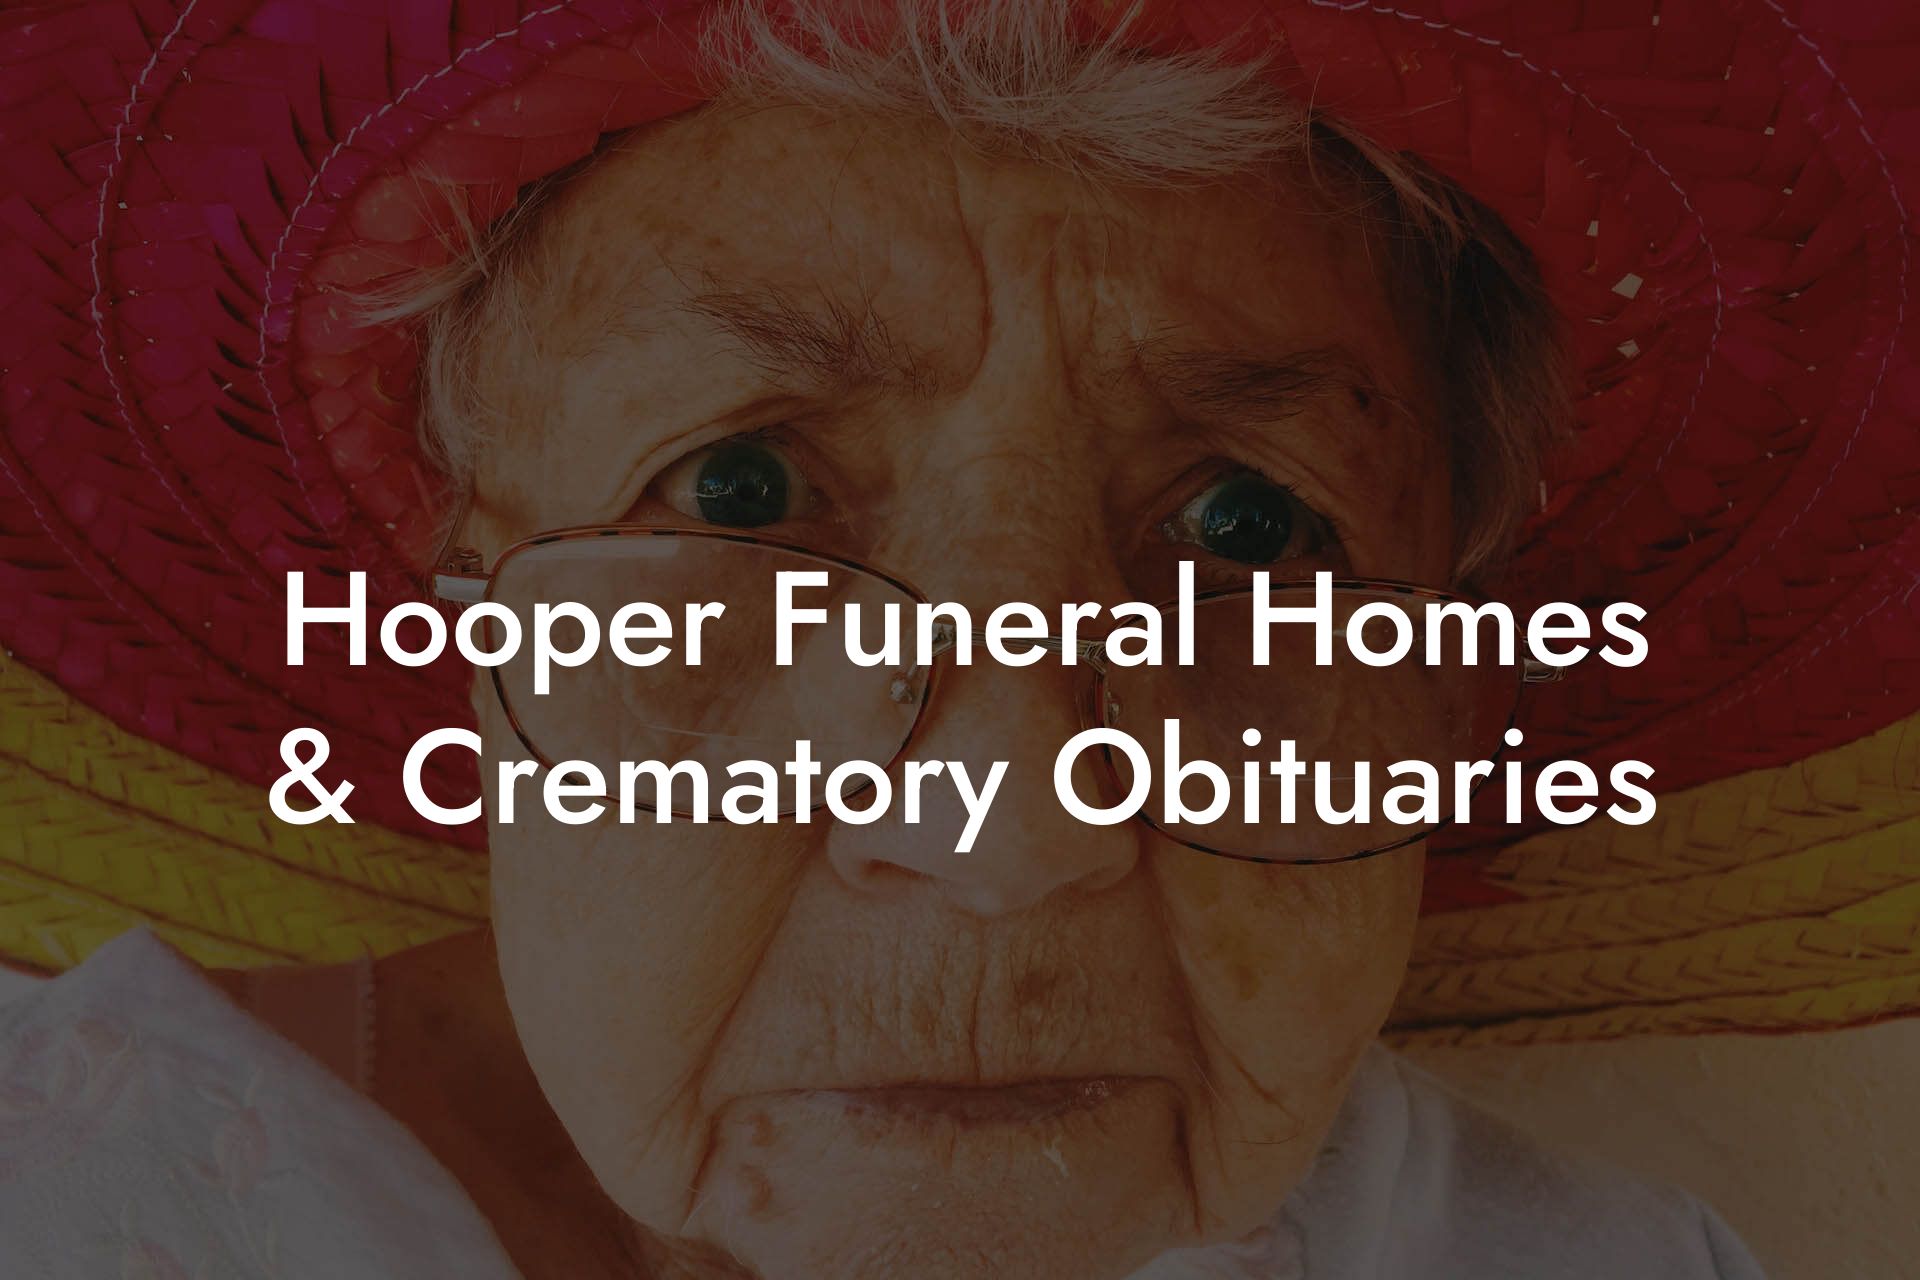 Hooper Funeral Homes & Crematory Obituaries